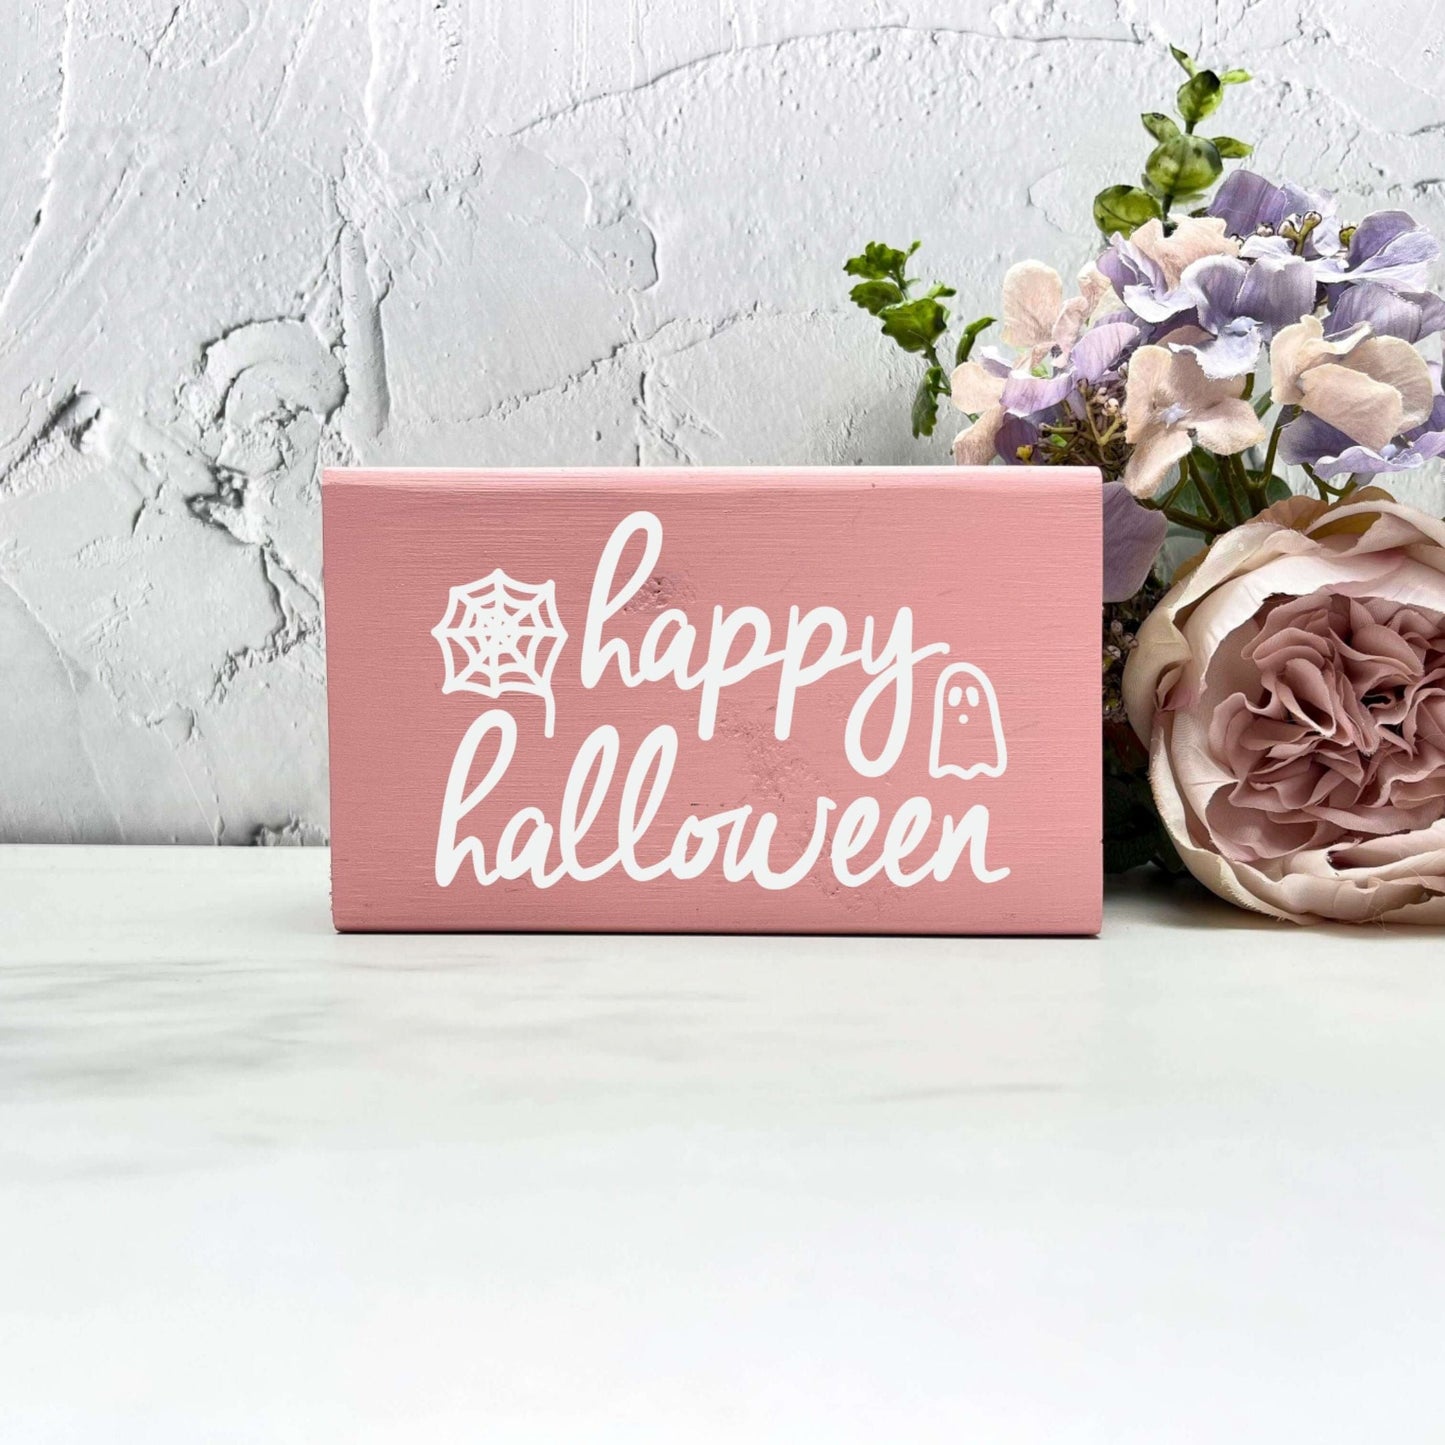 Happy Halloween Sign, Halloween Wood Sign, Halloween Home Decor, Spooky Decor